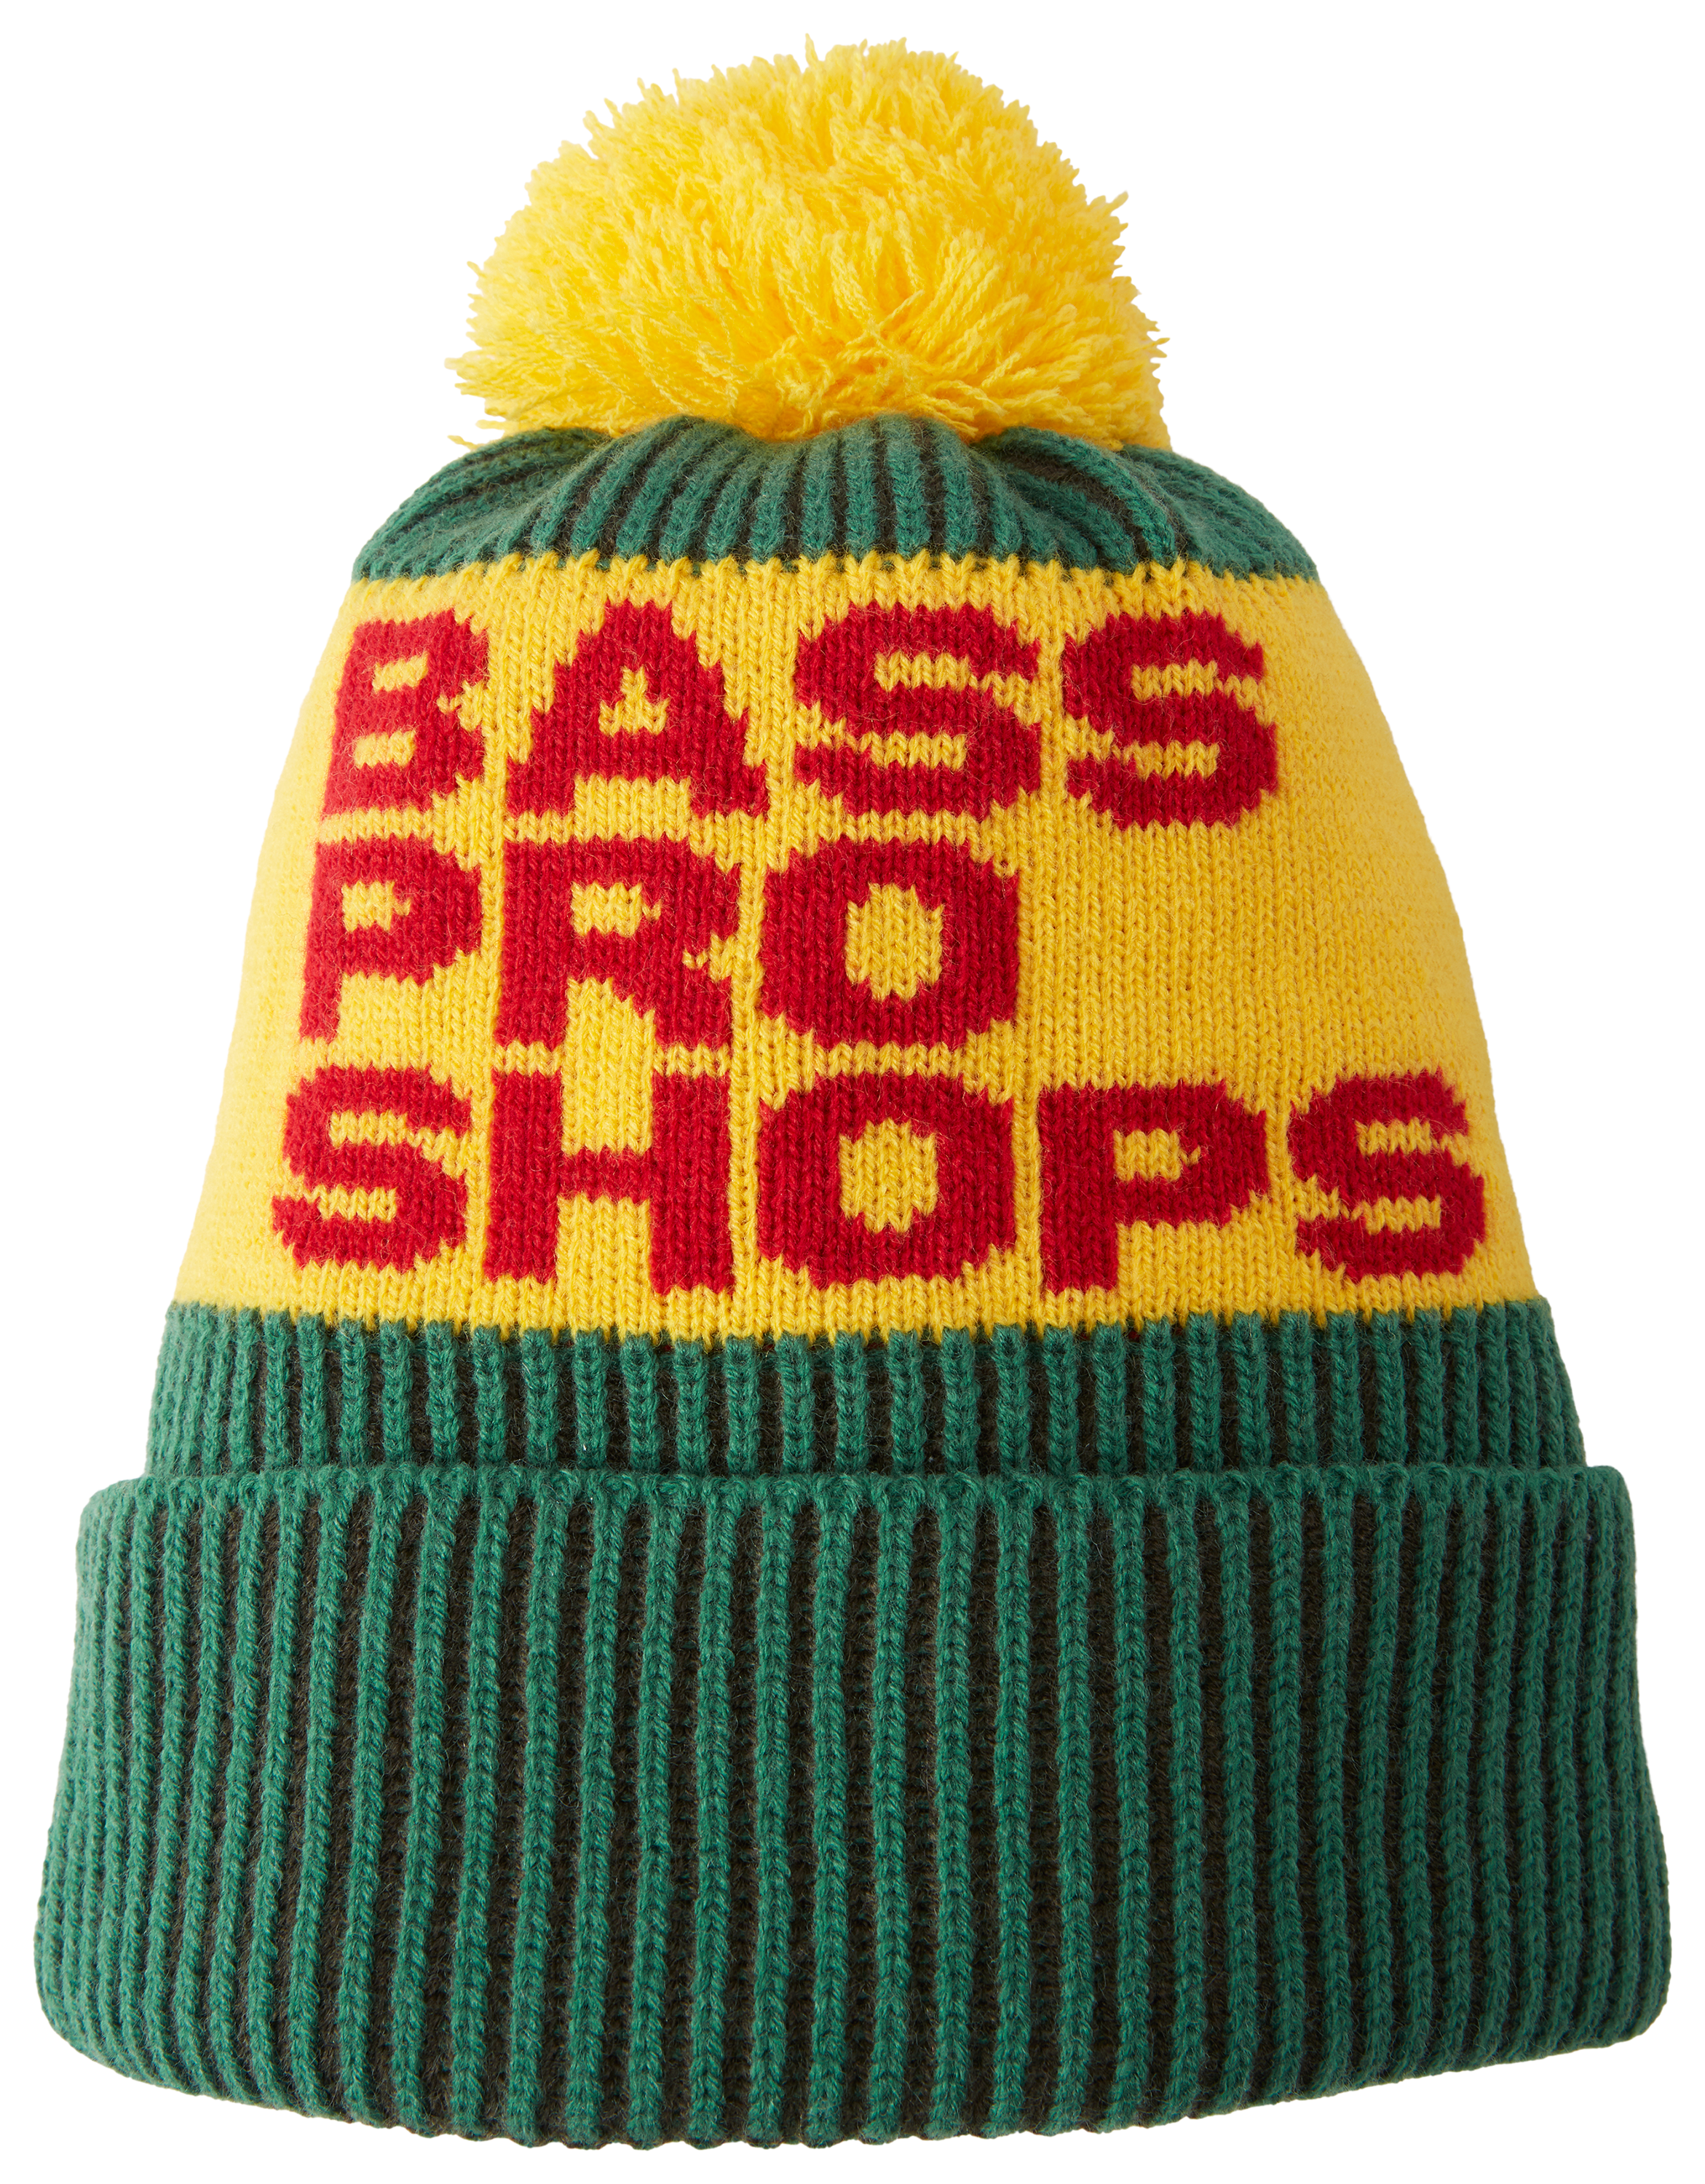 Bass Pro Shops Vintage Knit Beanie